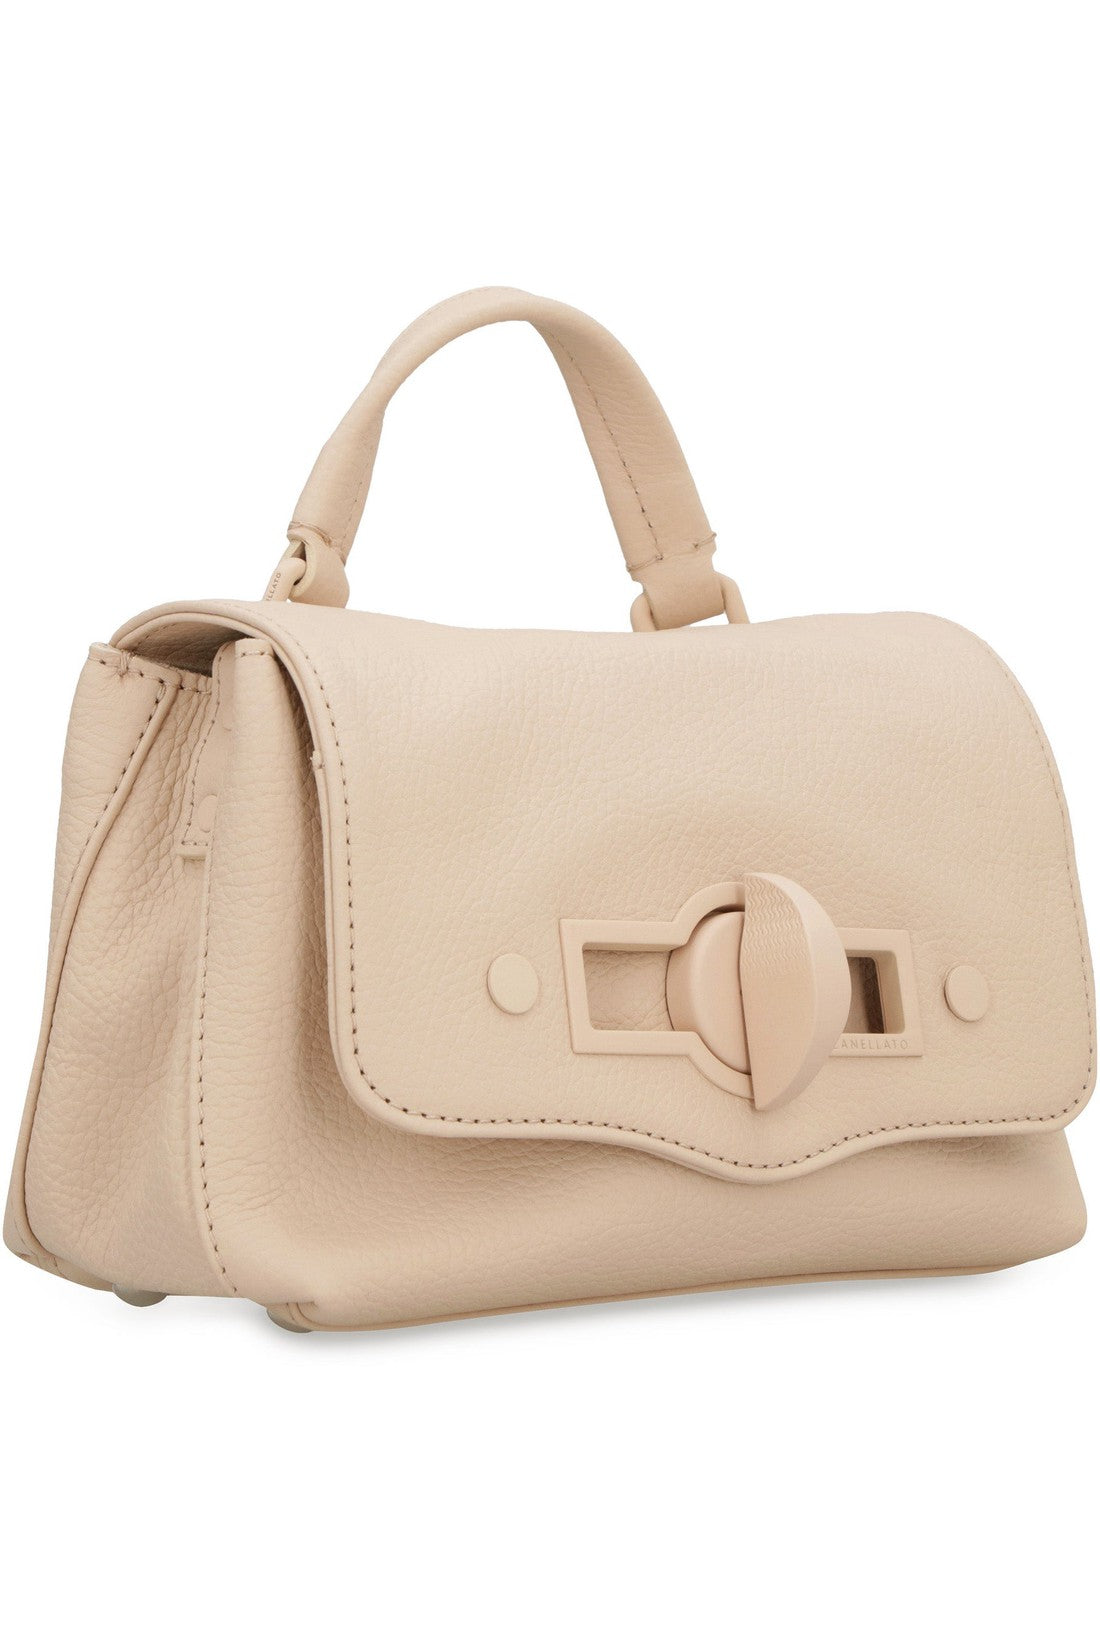 Zanellato-OUTLET-SALE-Postina Baby leather handbag-ARCHIVIST